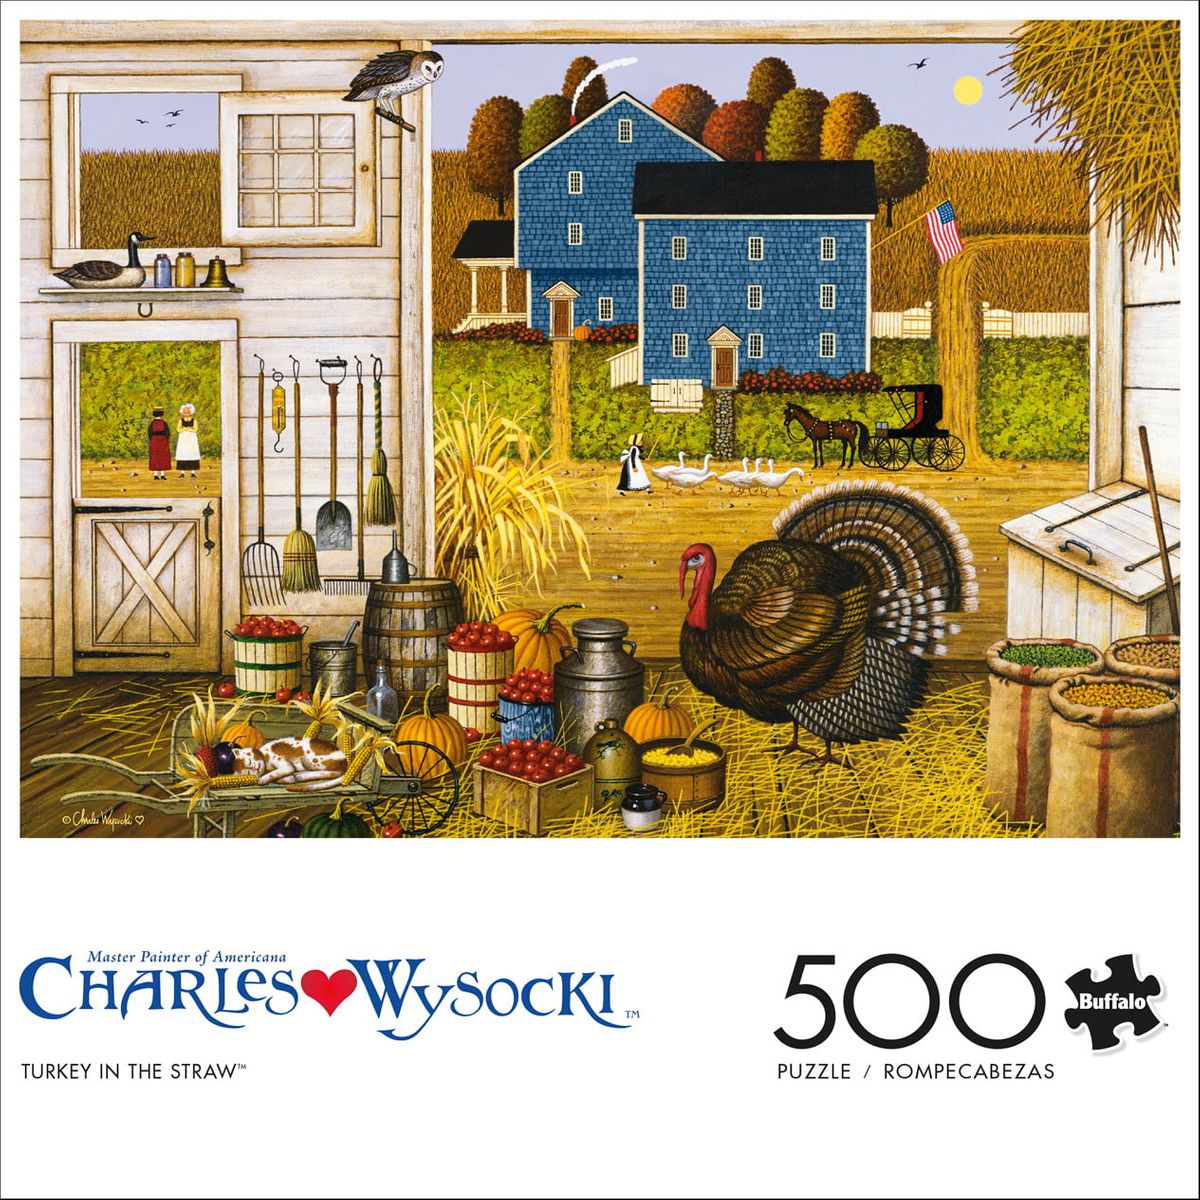 [RDY] [送料無料] Buffalo Games 500ピース チャールズ・ウィソッキー 七面鳥の藁人形ジグソーパズル [楽天海外通販] | Buffalo Games 500-Piece Charles Wysocki Turkey In The Straw Interlocking Jigsaw Puzzle